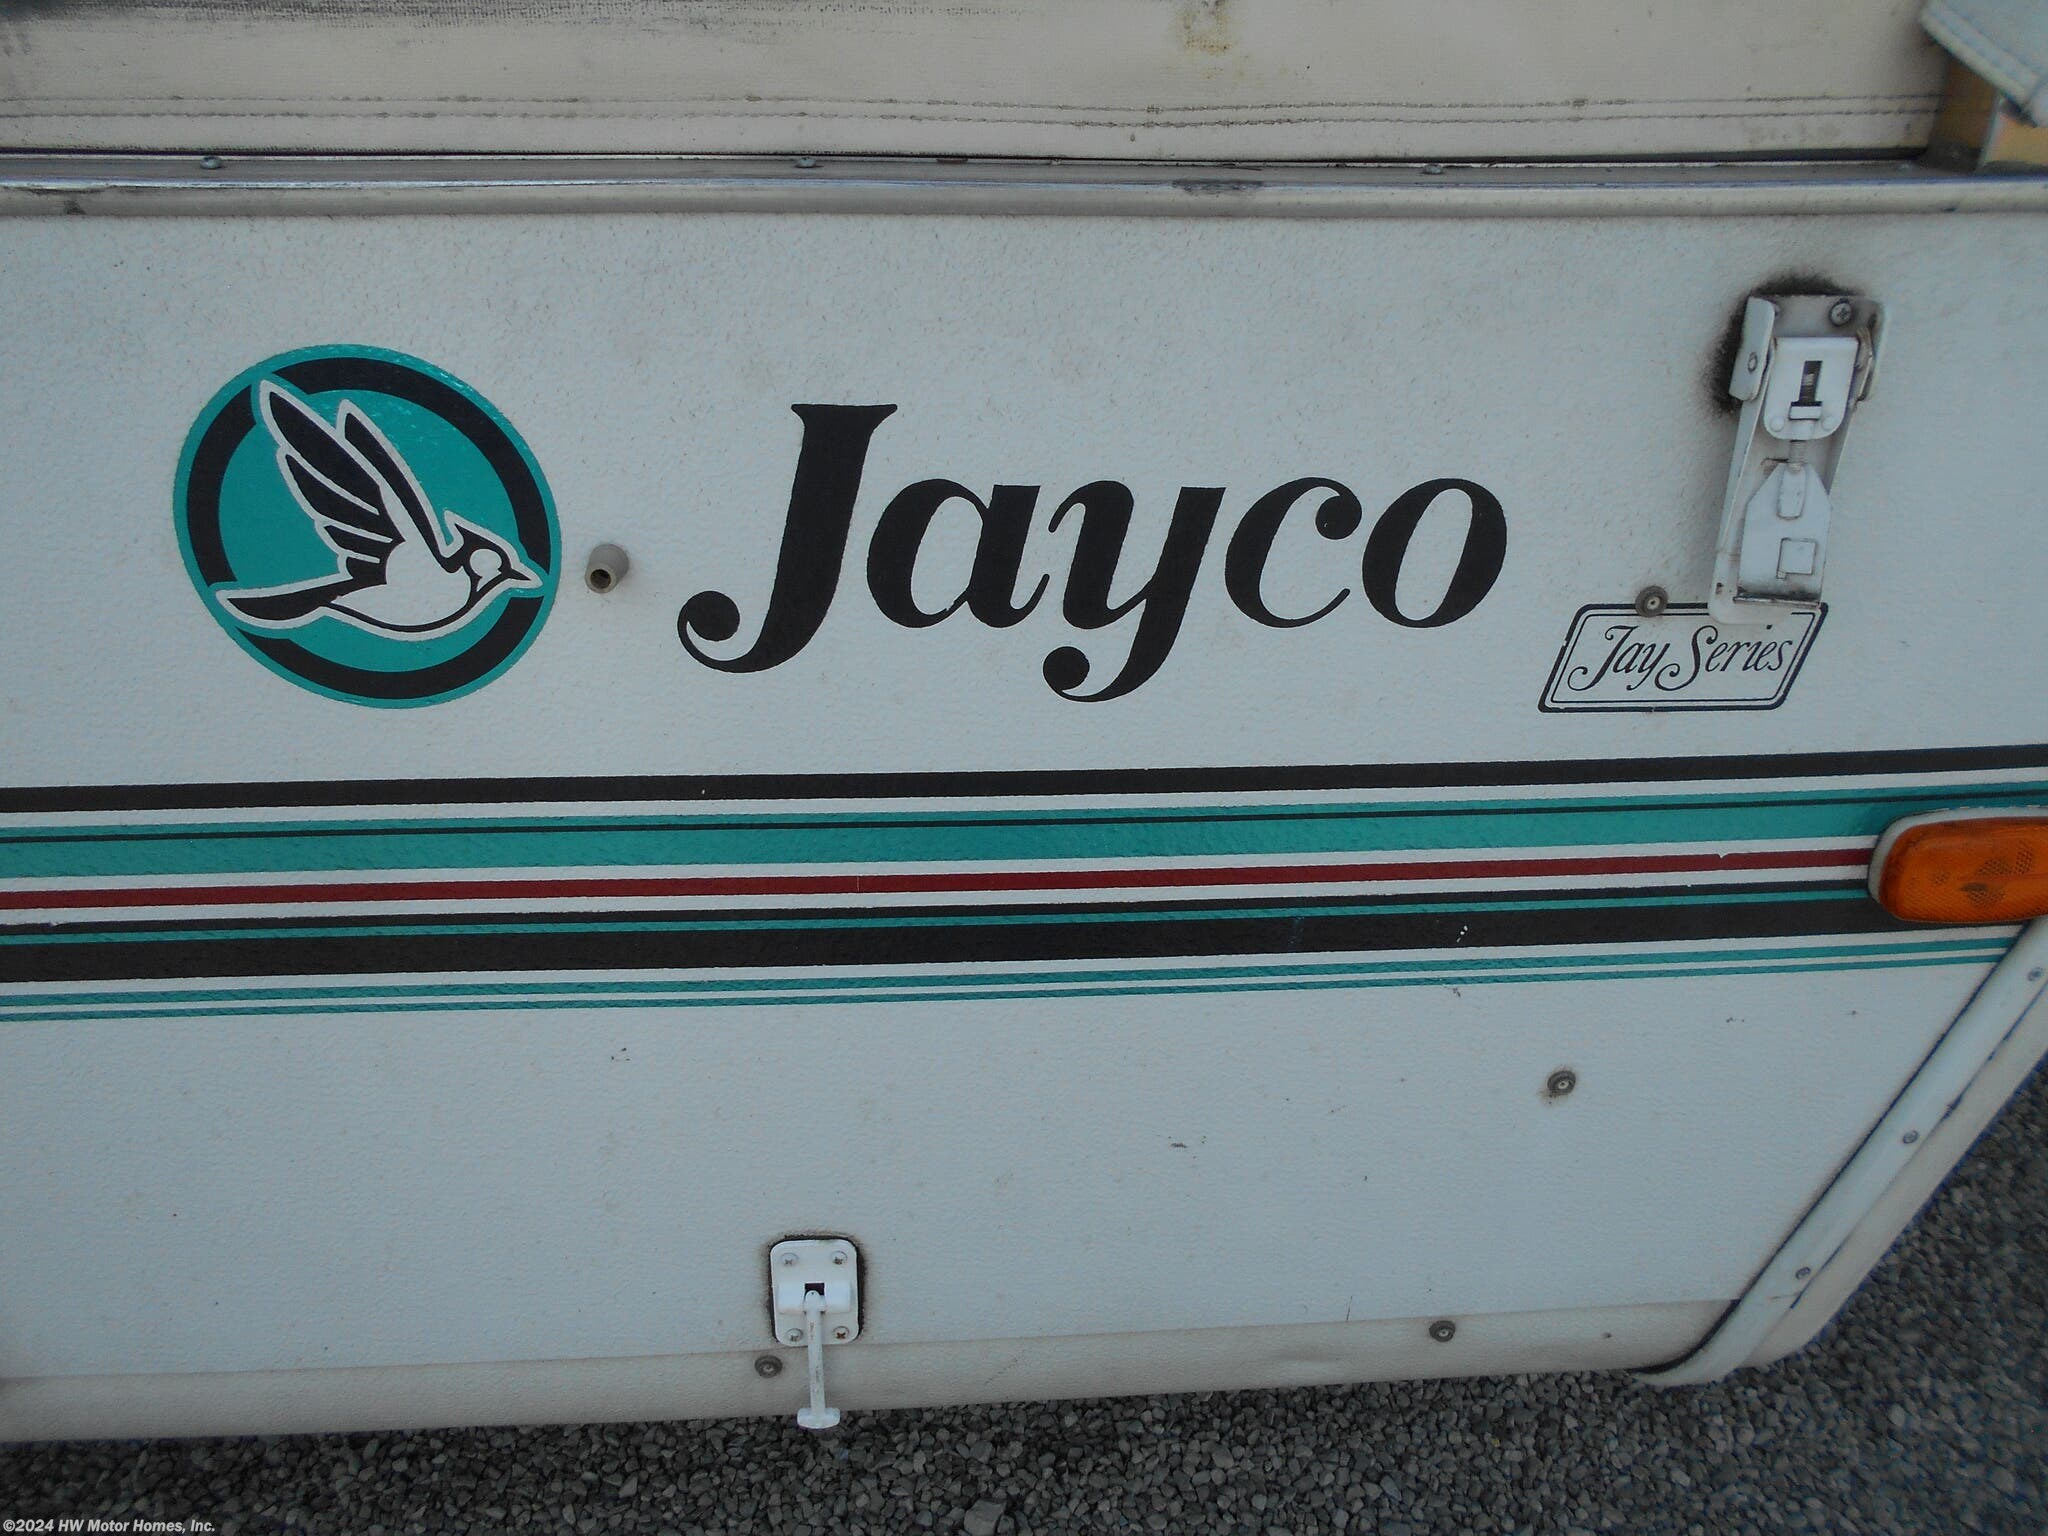 1993 jayco 1006 jay series power converter box specs